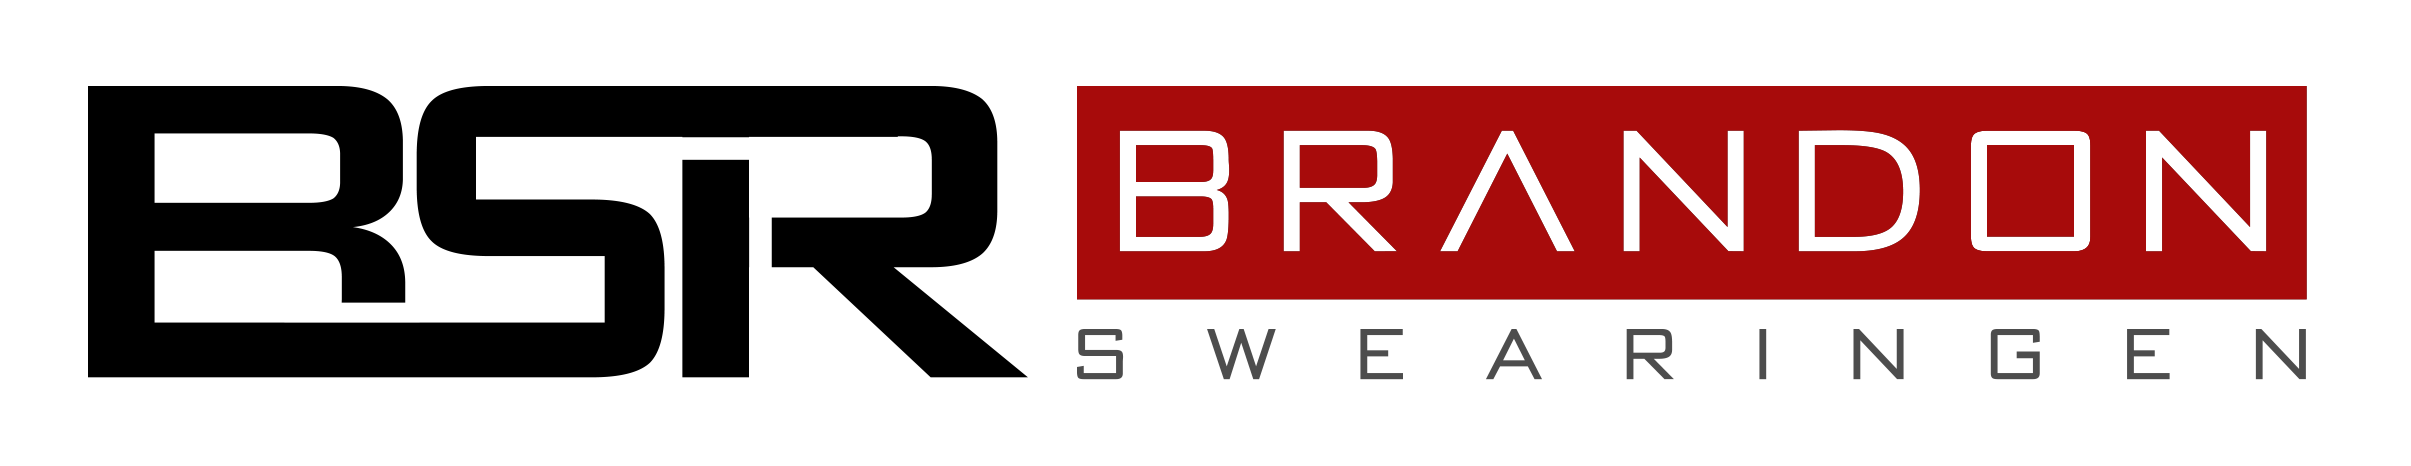 Brandon Swearingen Renovations, LLC | Restore OKC